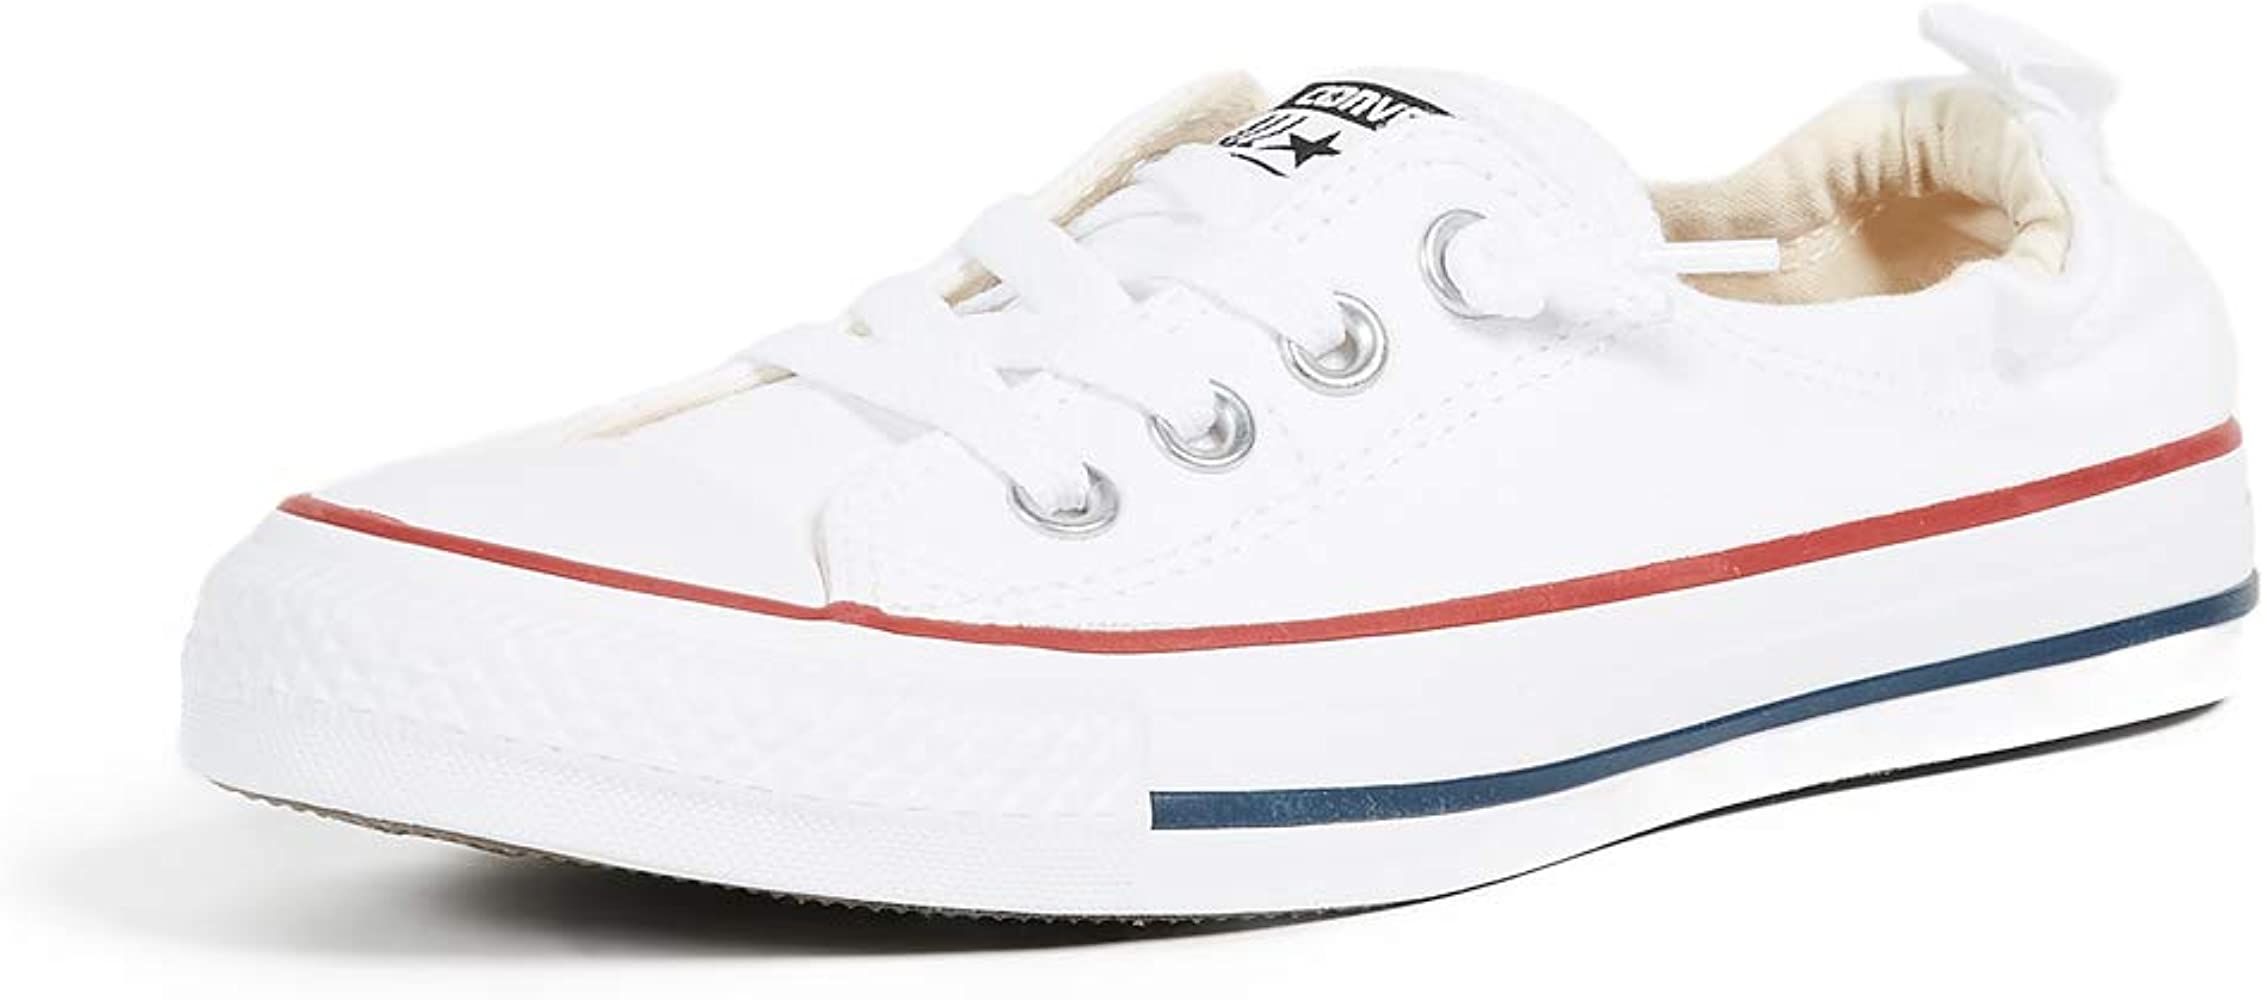 Converse Women's Chuck Taylor All Star Shoreline Slip On Sneakers | Amazon (US)